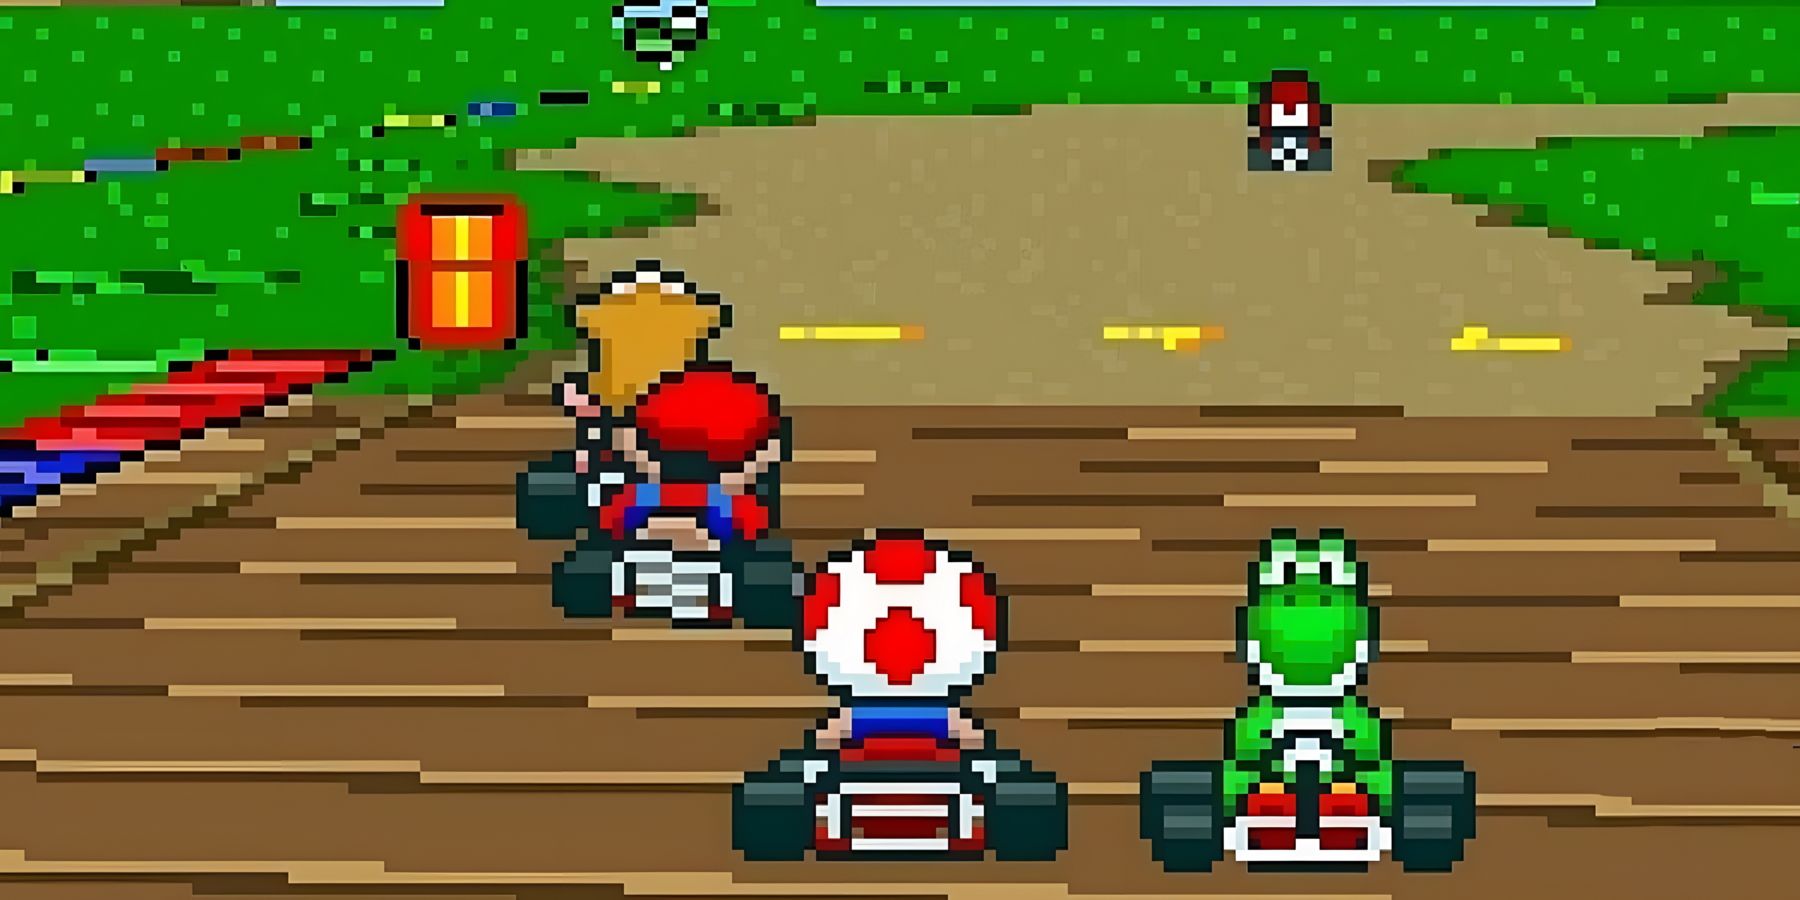 Super Mario Kart running on the SNES Classic